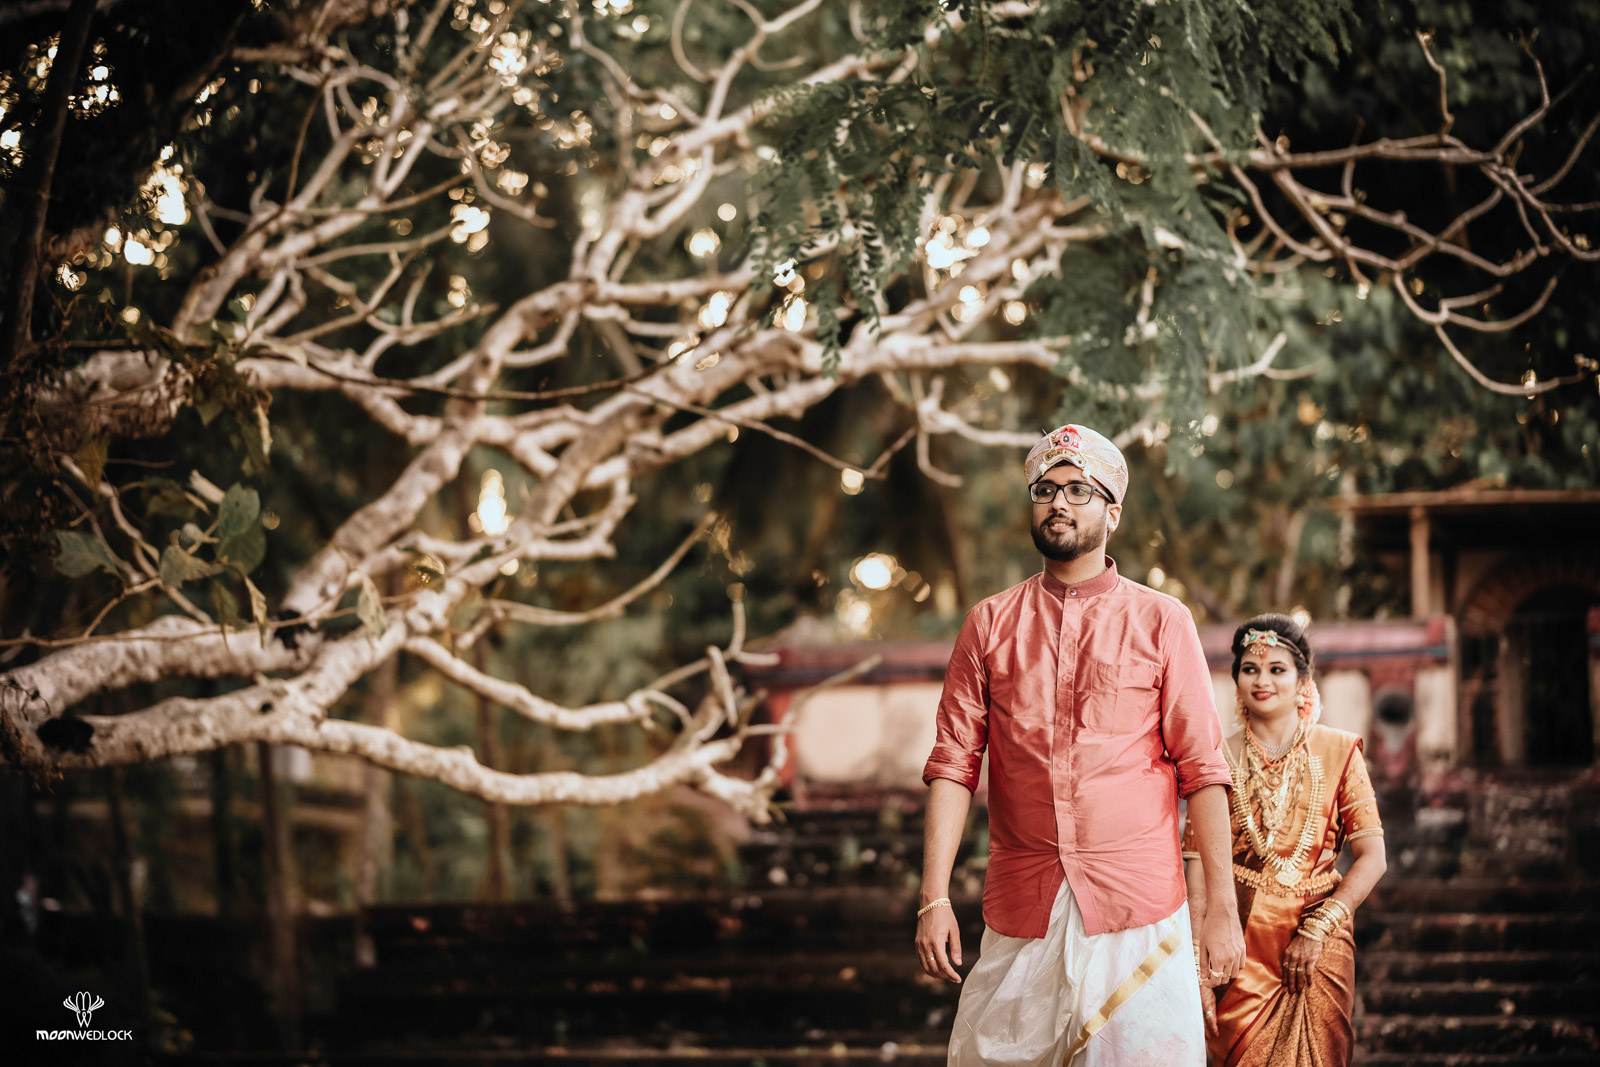 kannada-wedding-photographers-in-bangalore-moonwedlock (61)